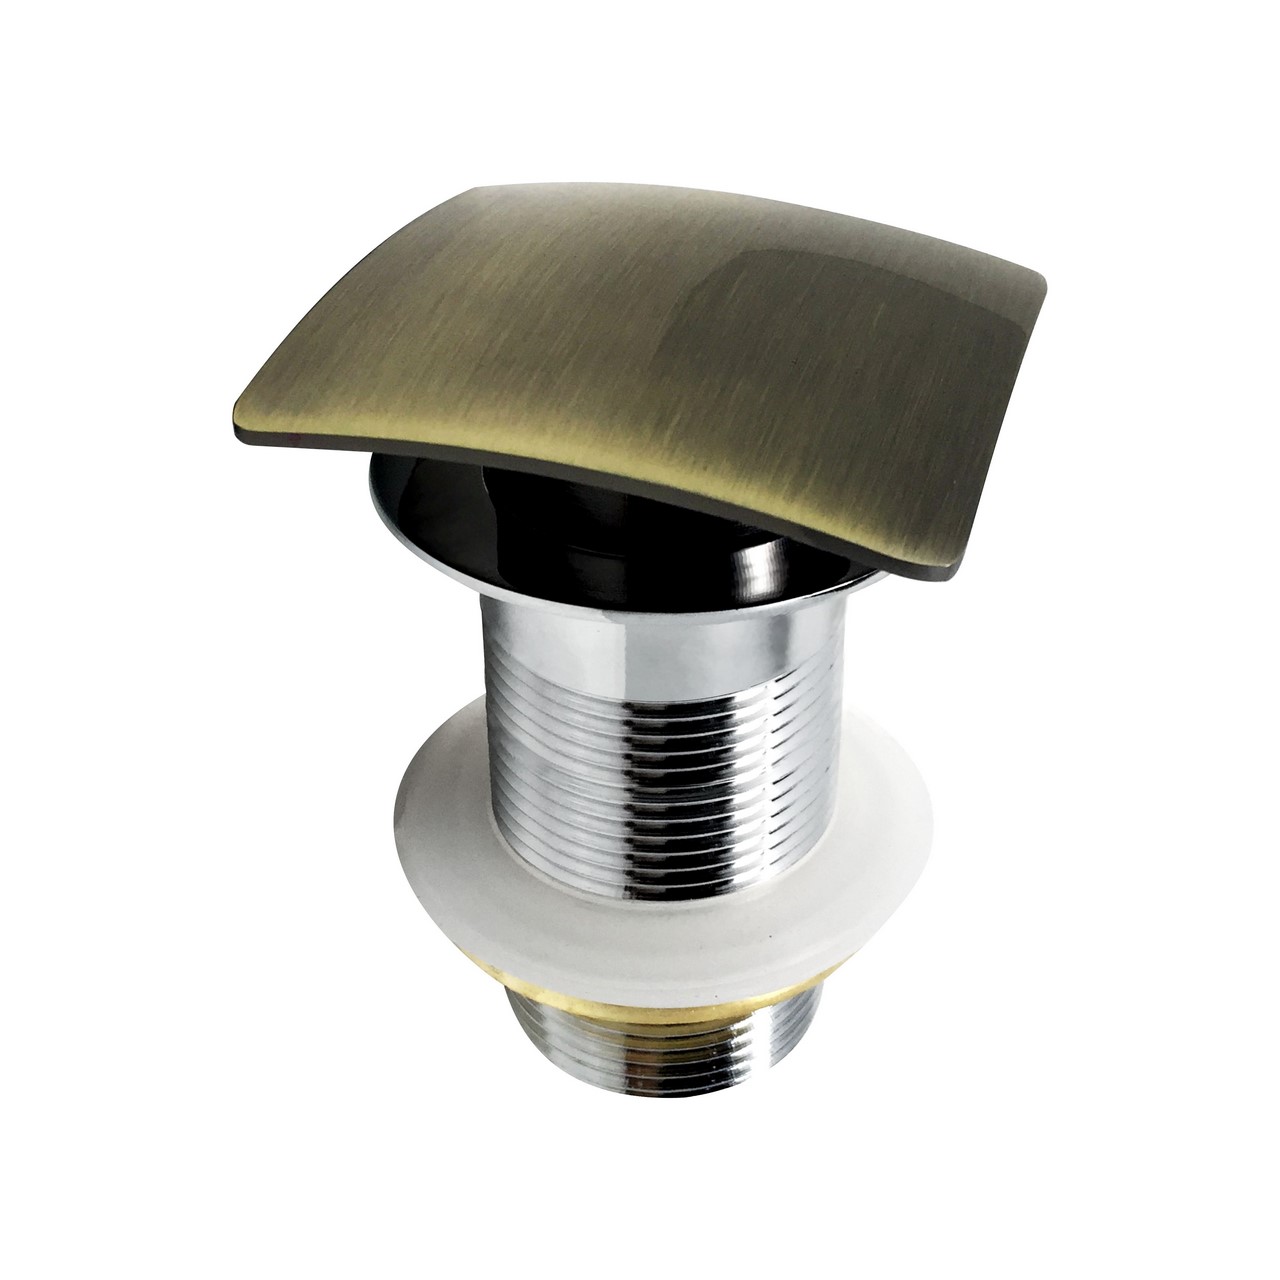 KubeBath Solid Brass Construction Square Pop-Up Drain W/ Gold Bronze Finish – No Overflow